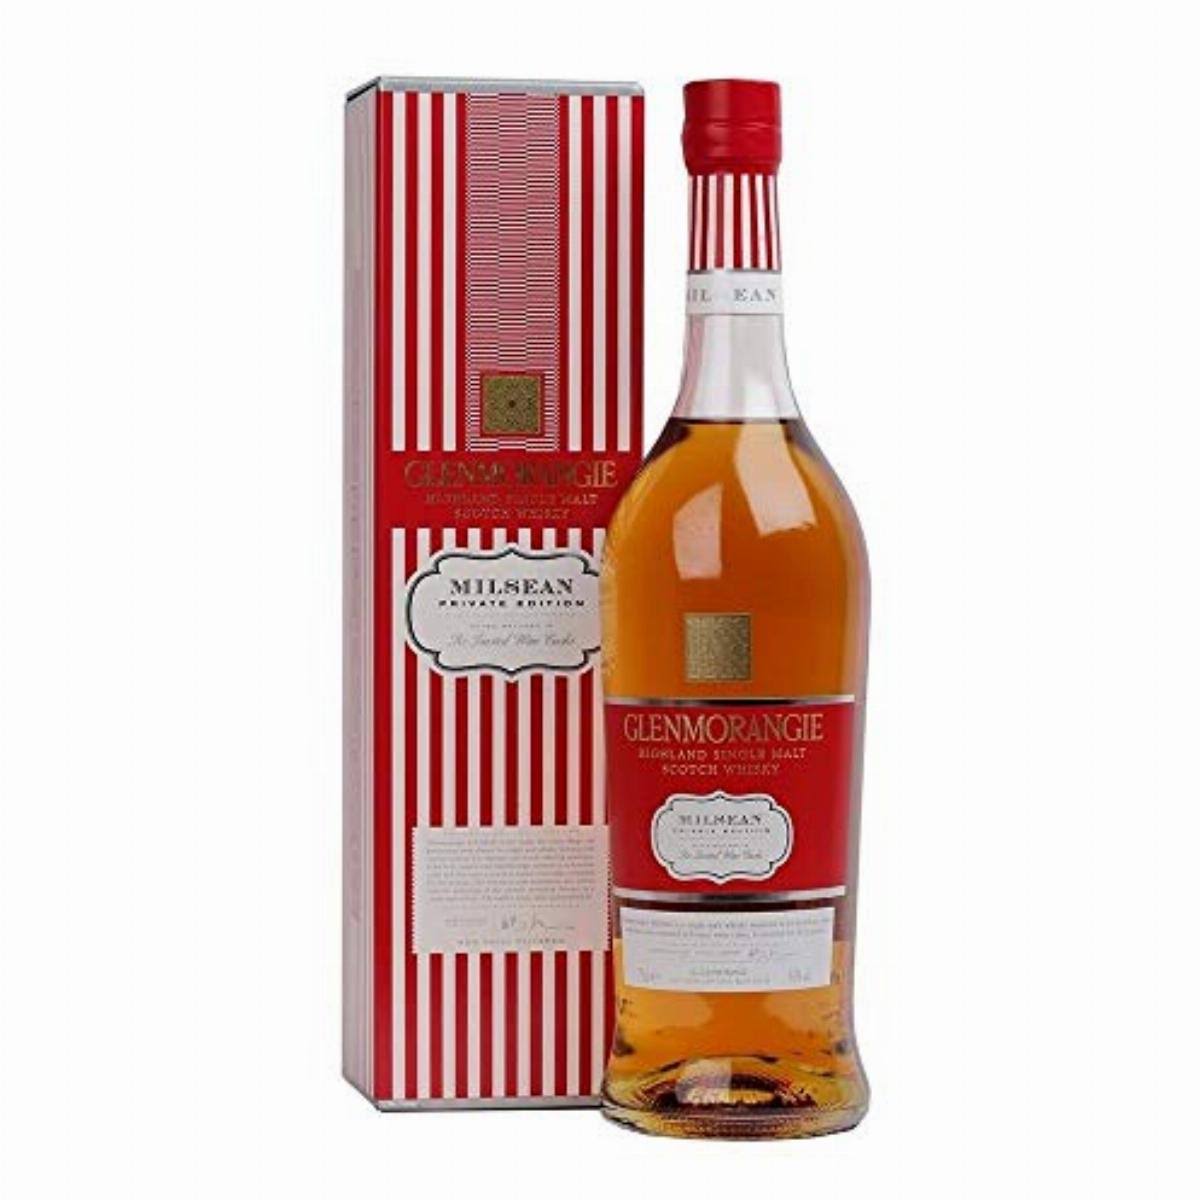 Glenmorangie Milsean Private Edition Single Malt - Scotch Whiskey, 750ml